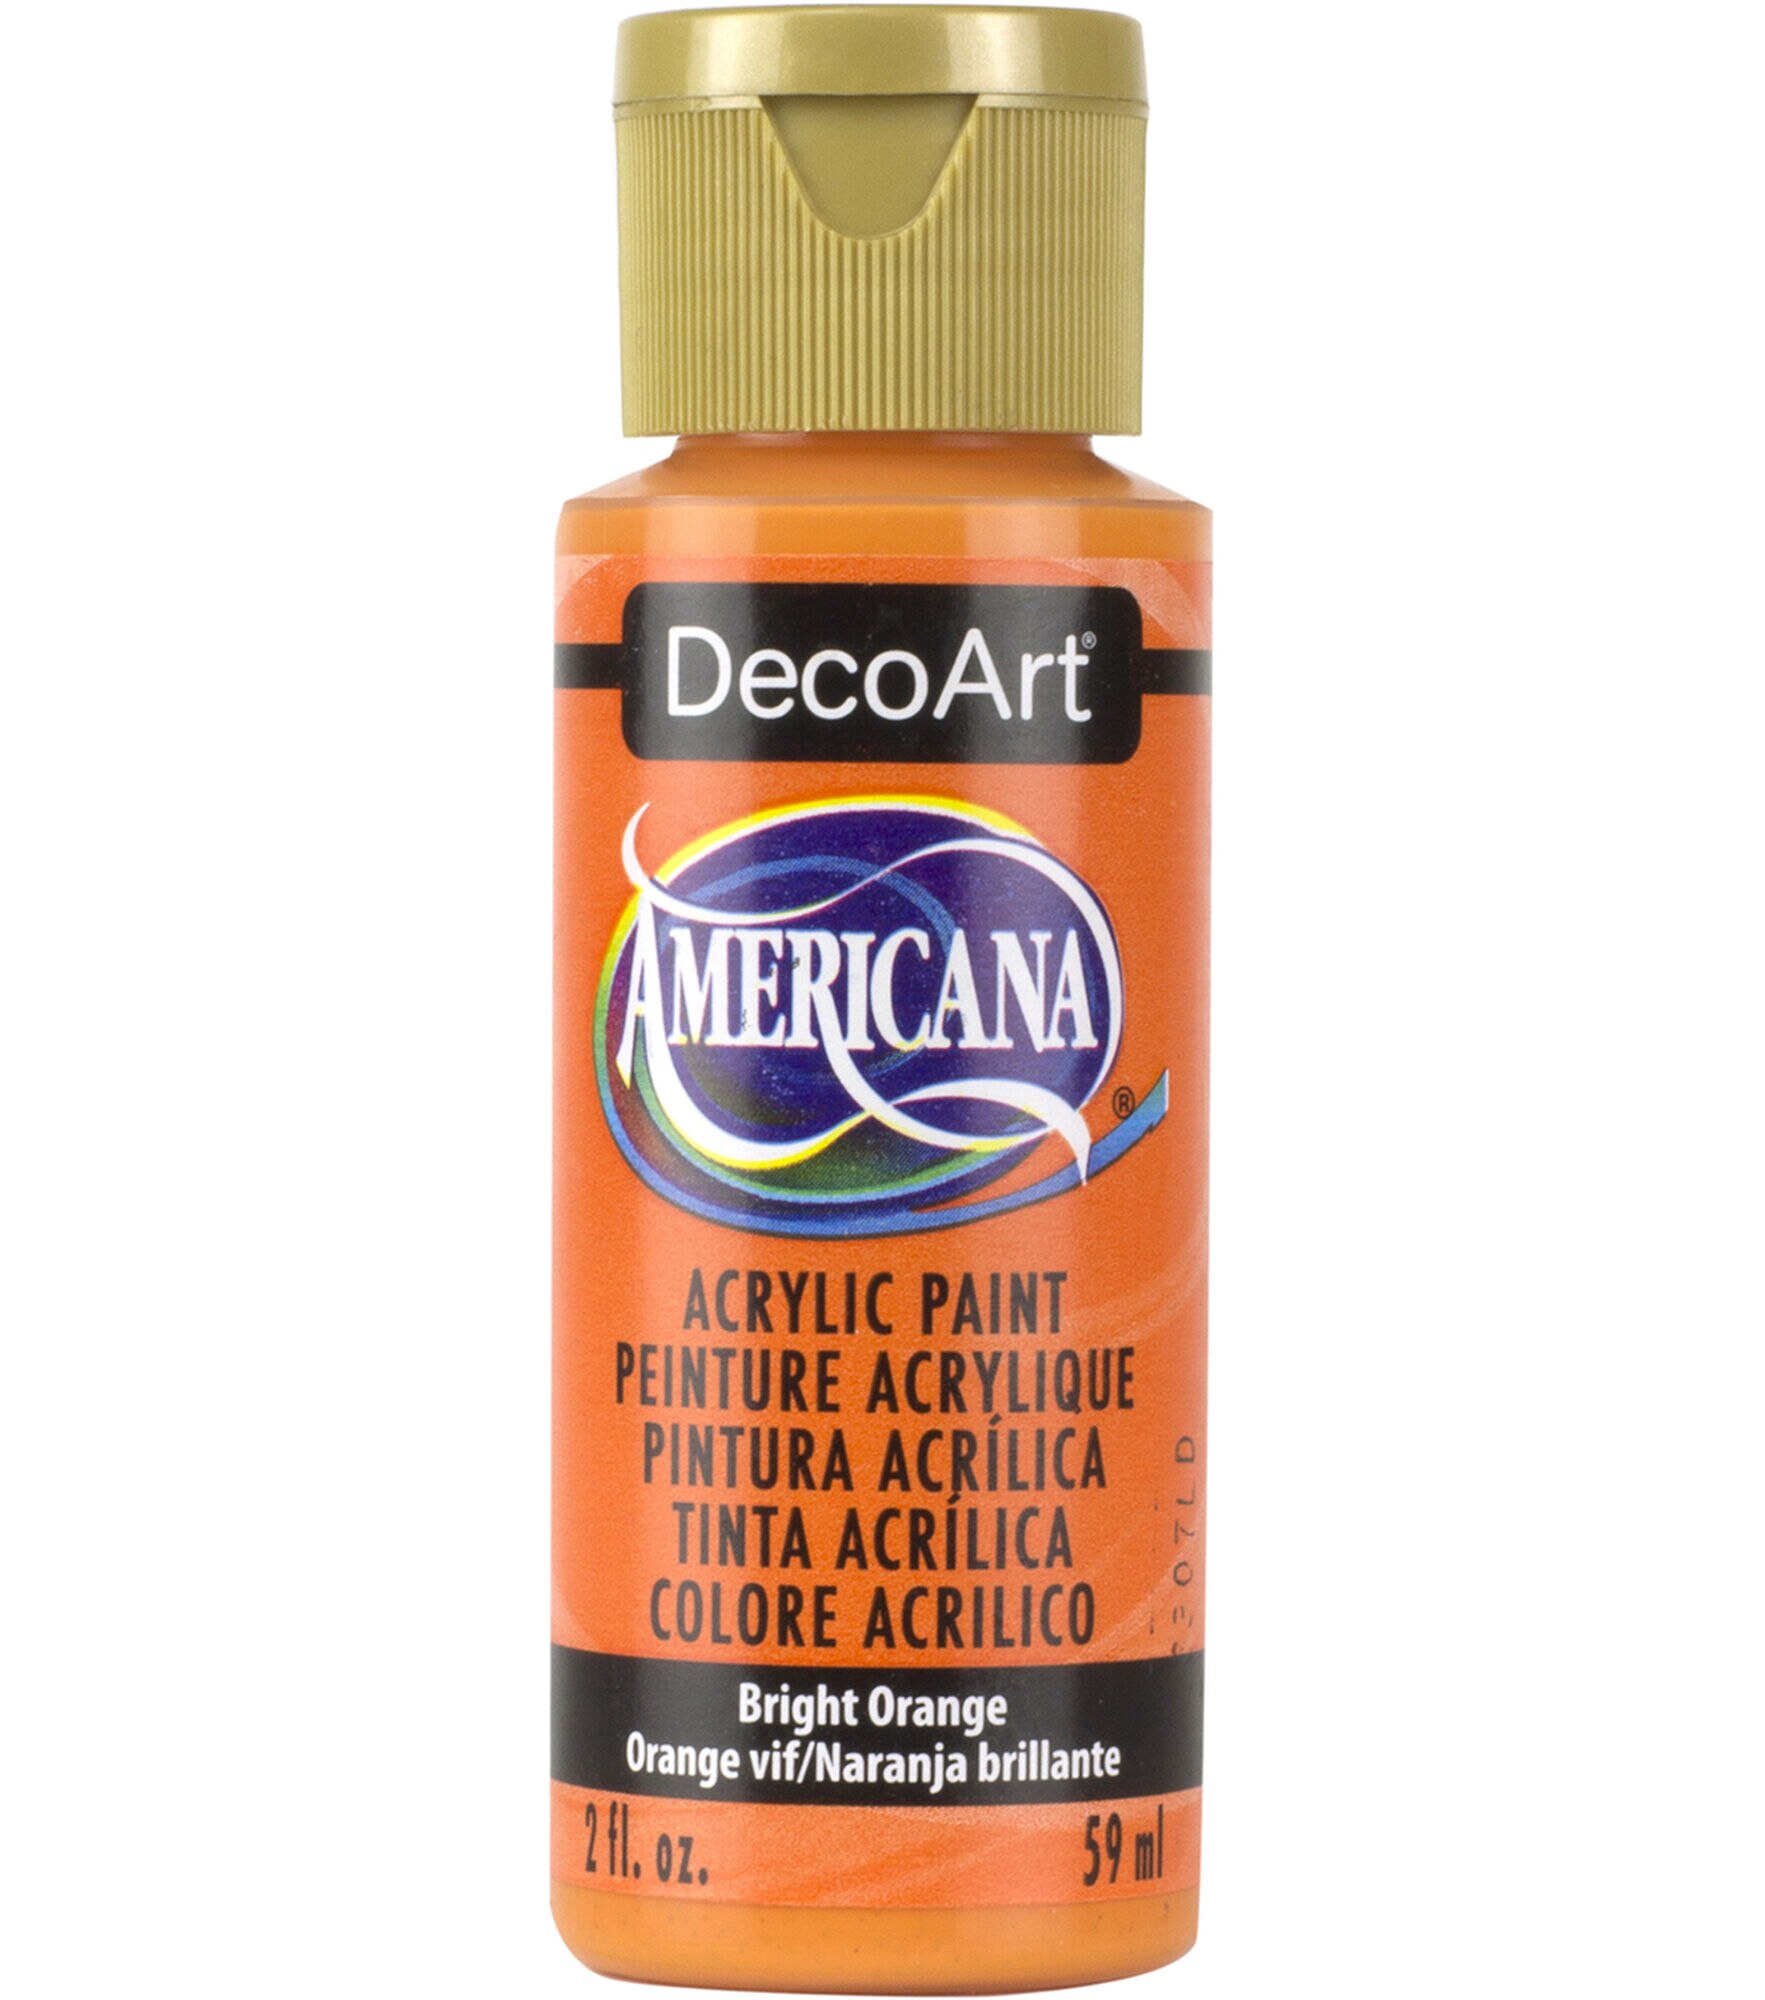 DecoArt Americana Acrylic 2oz Paint, Bright Orange, hi-res